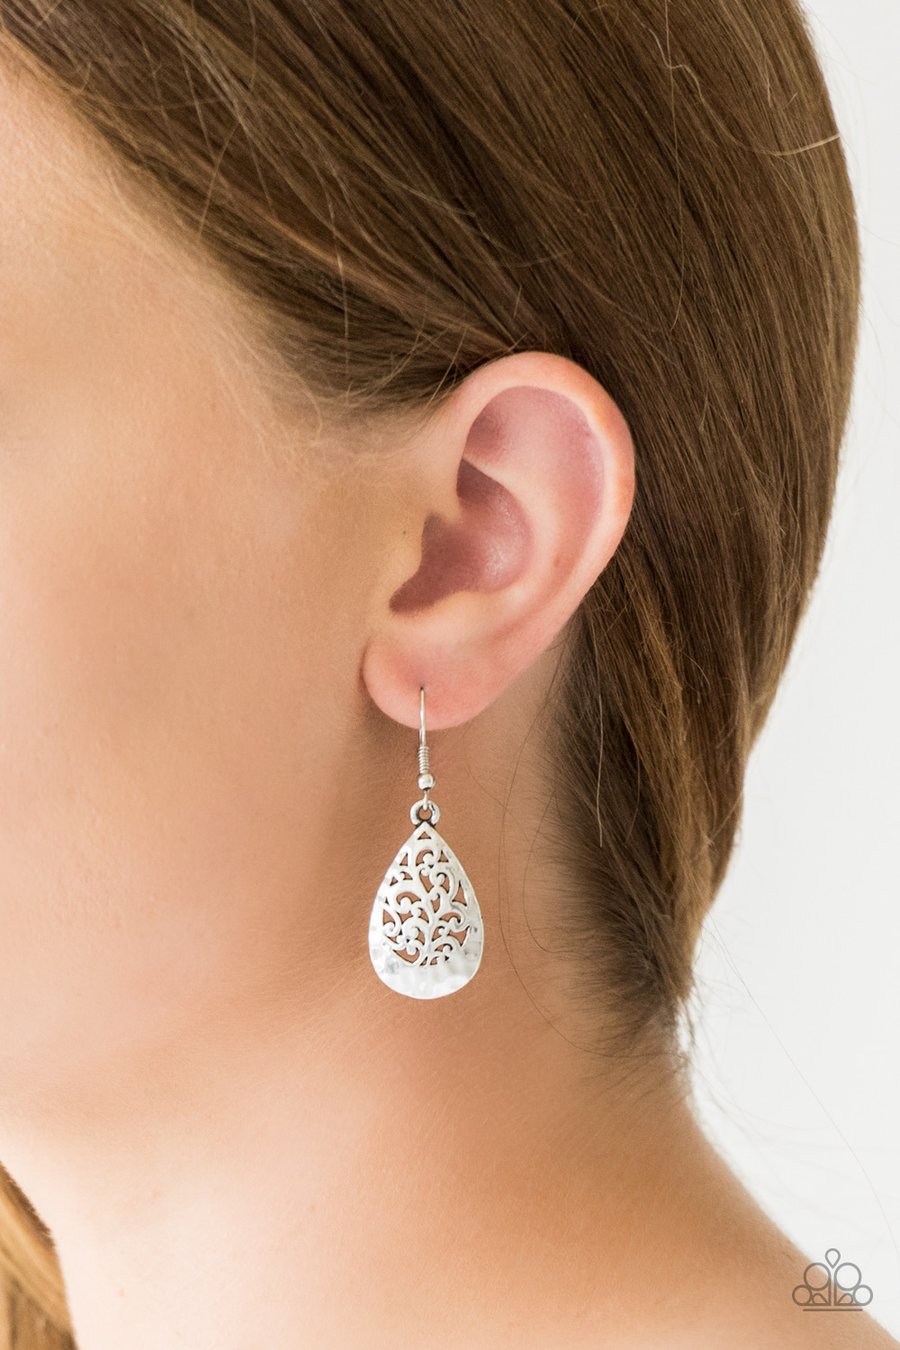 Paparazzi Accessories - New Nouveau - Silver Earrings